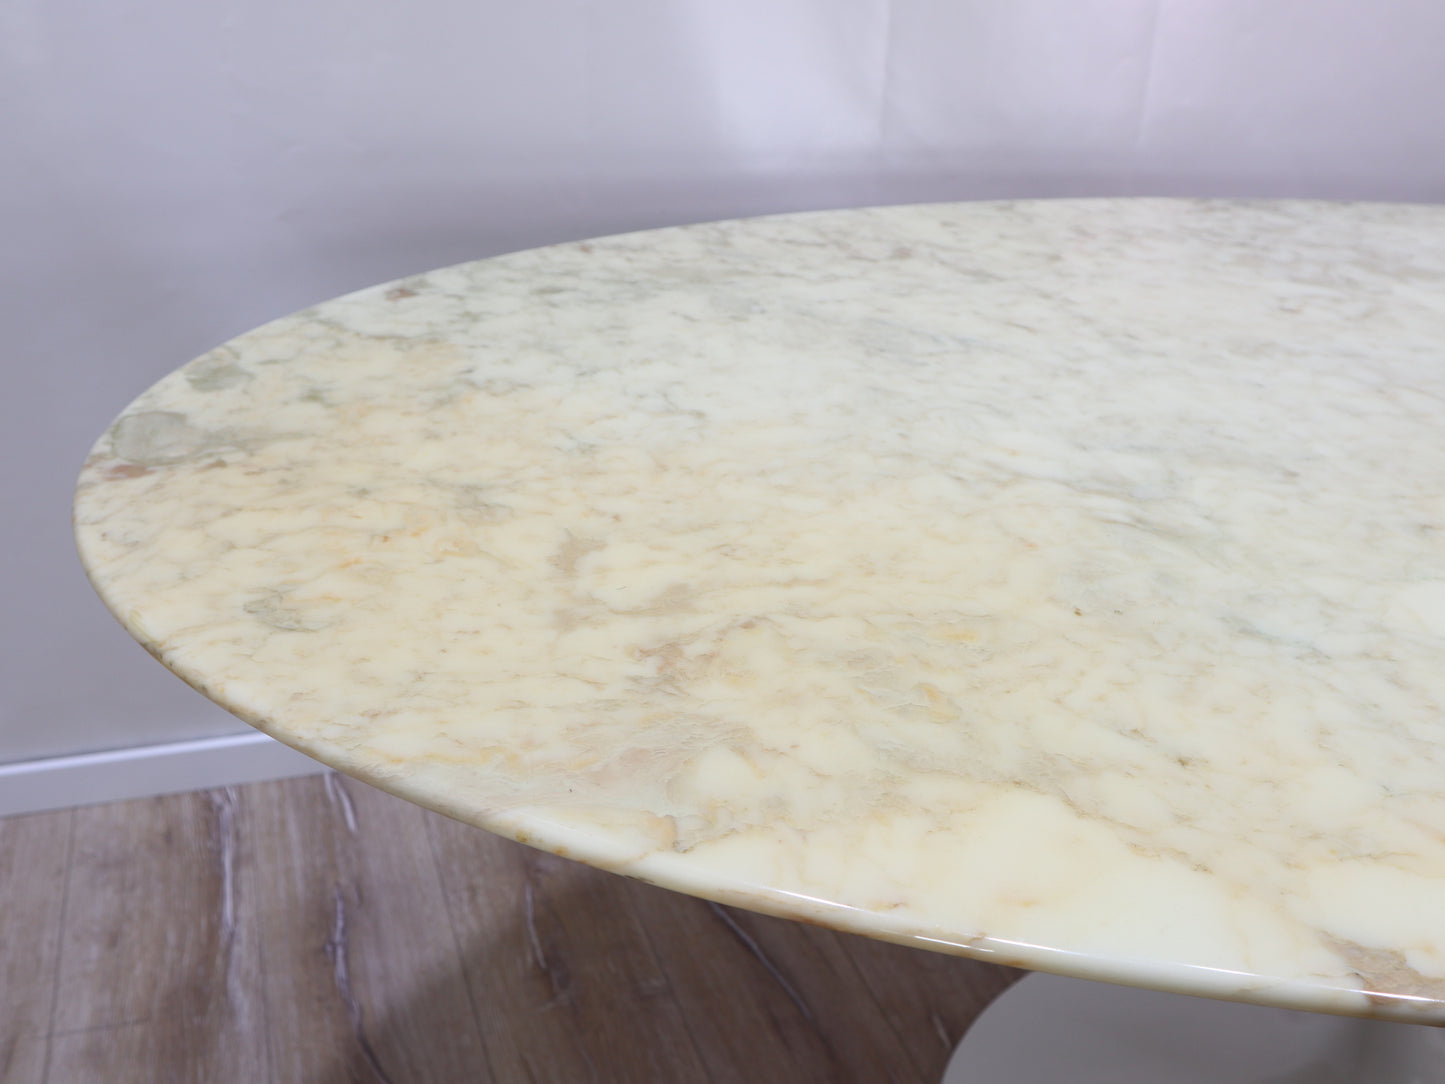 Knoll International Saarinen marble table